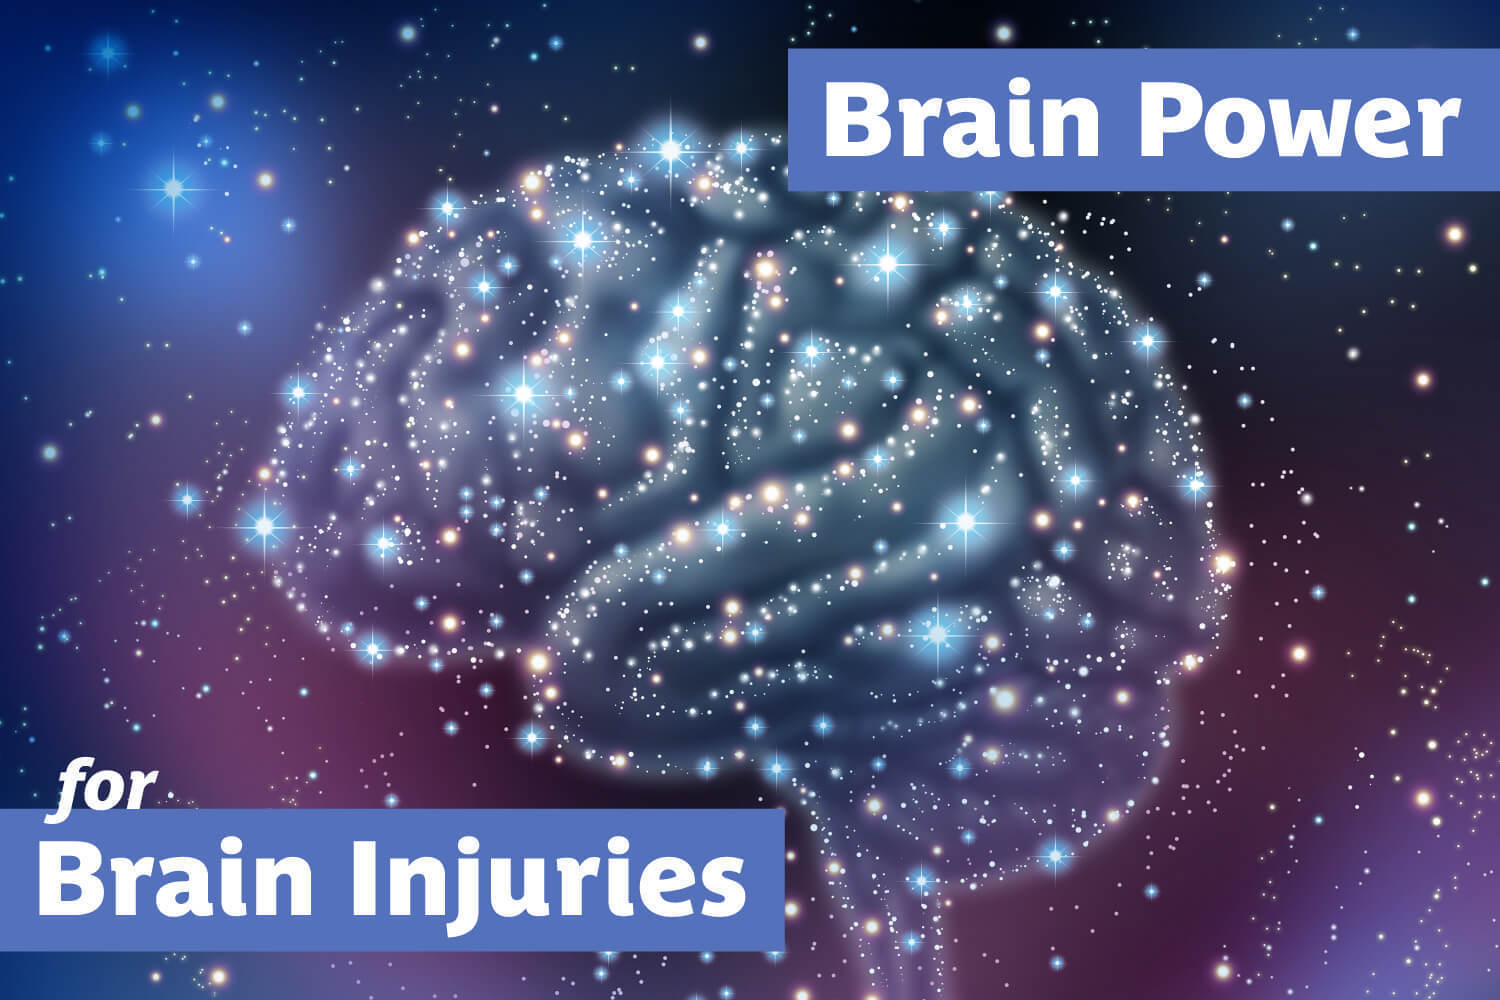 Brain Power for Brain Injuries, Flagstaff, Arizona, United States